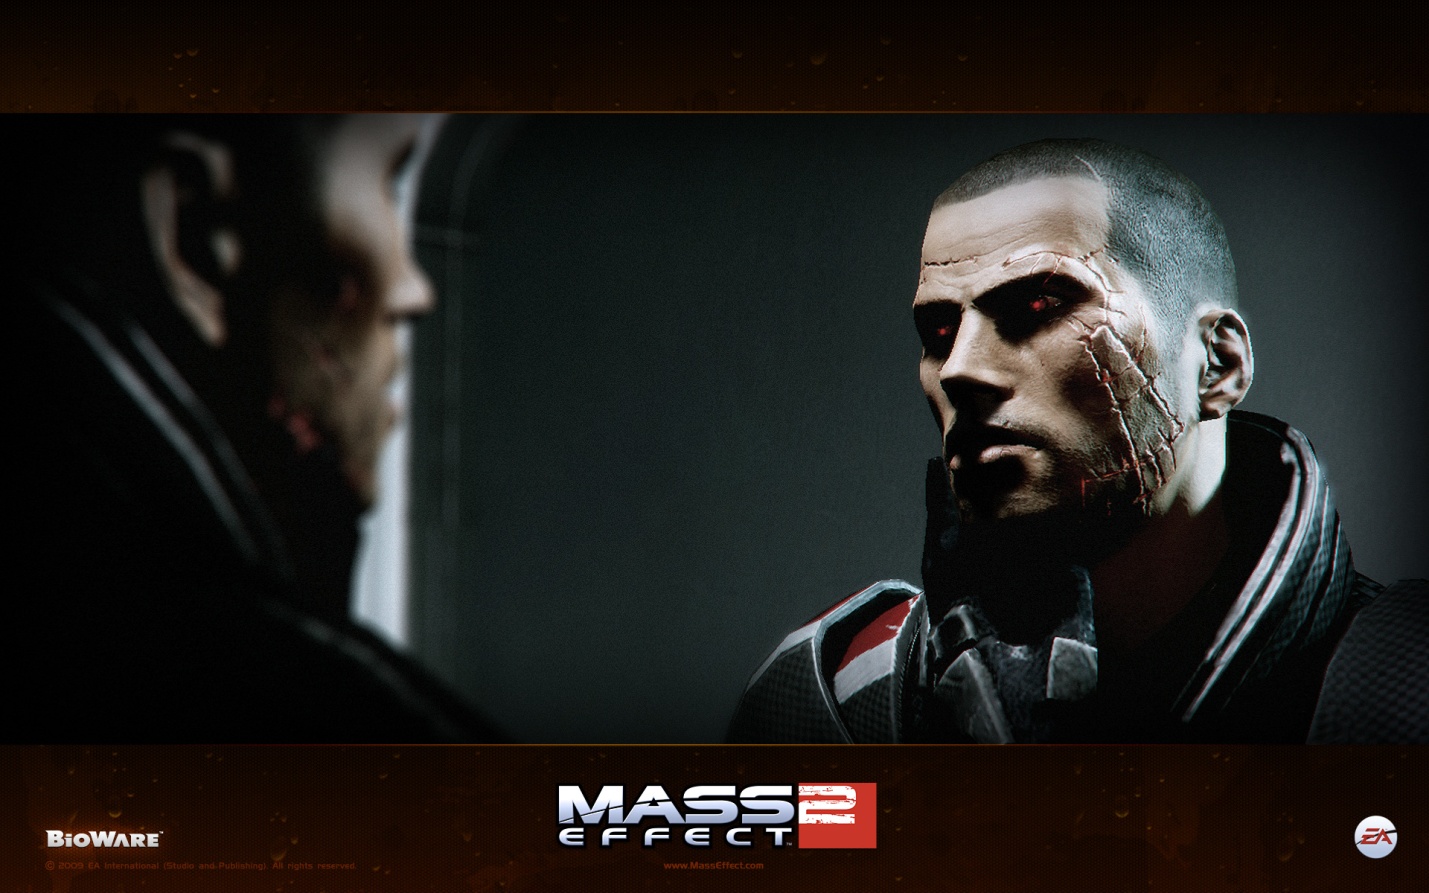   Mass Effect 2 - Tynu40k Goblina